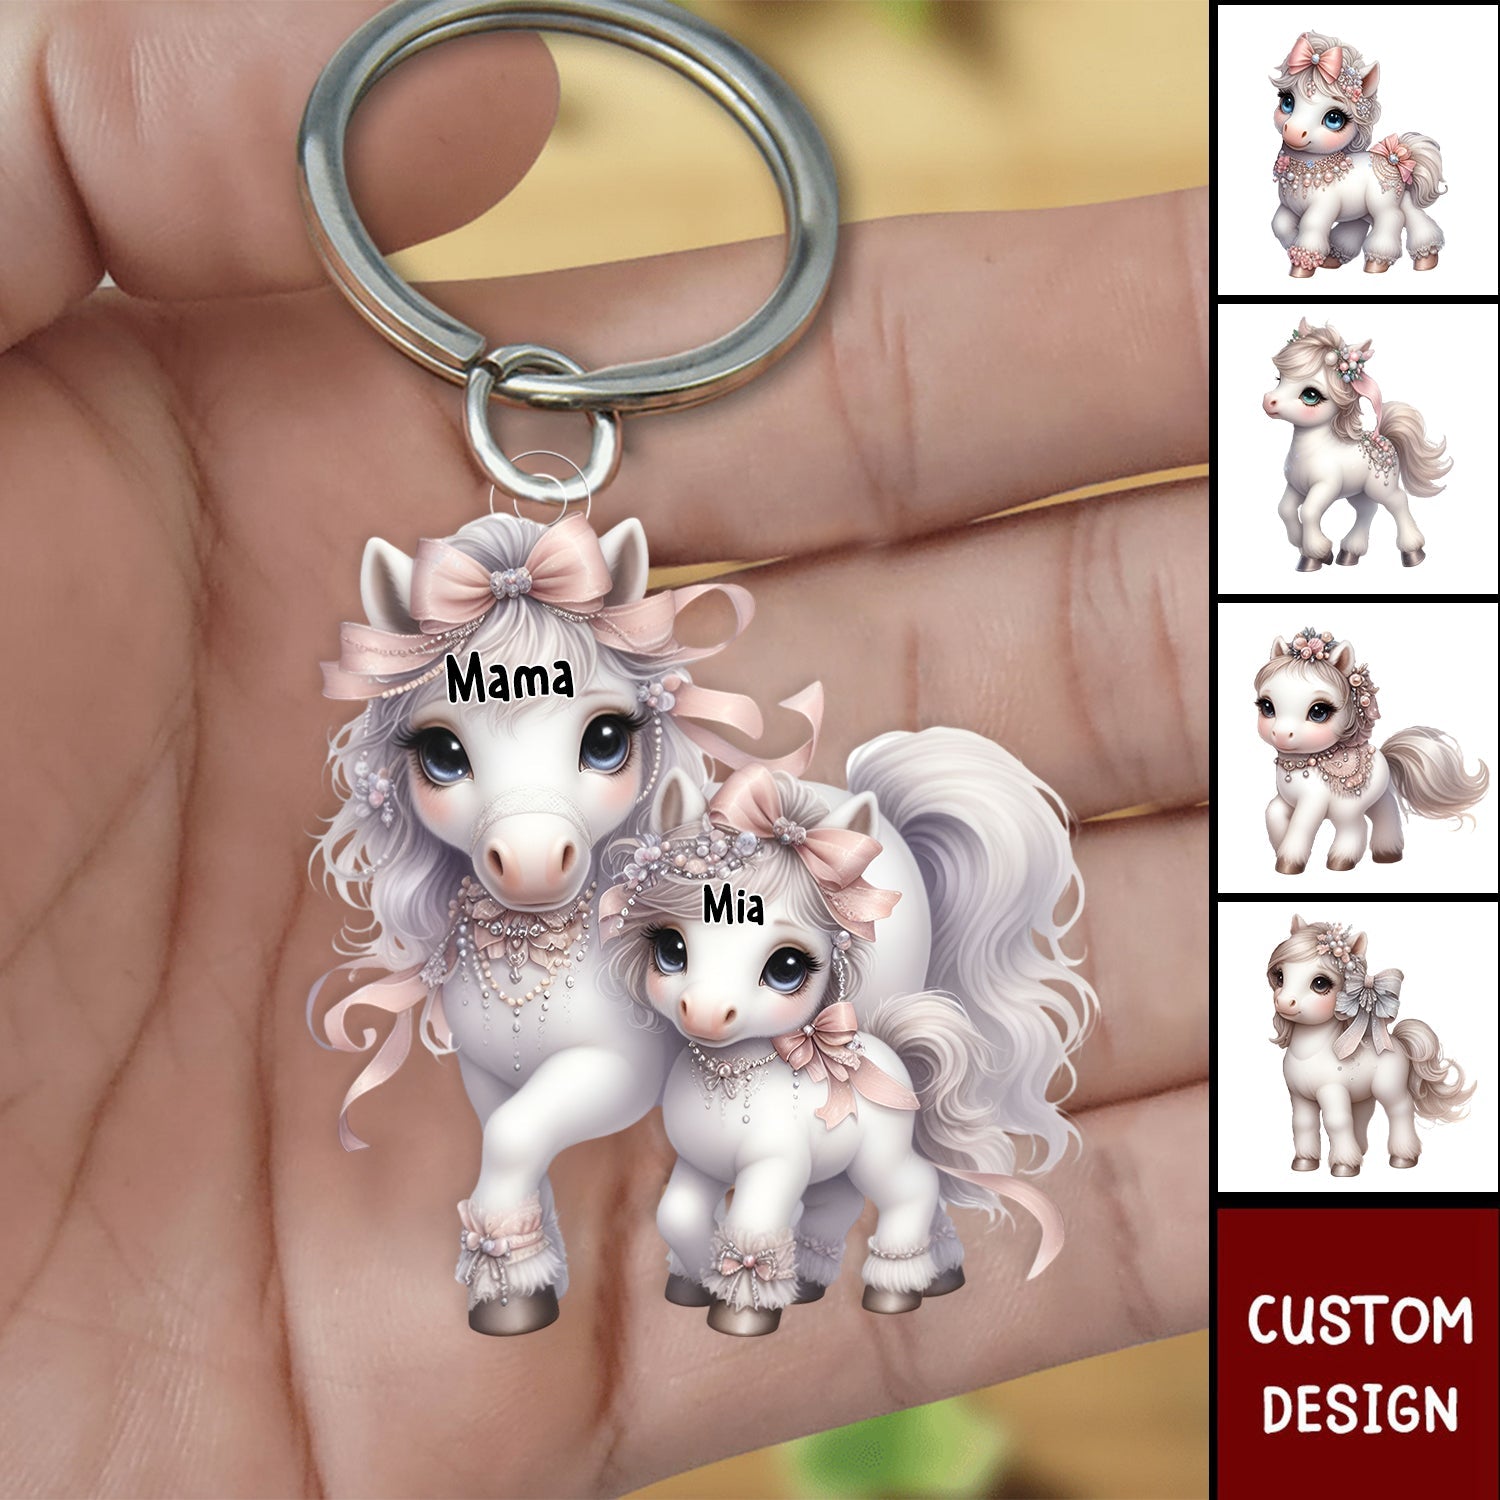 Grandma/Mama Cute Horse With Little Kids - Personalized Acrylic Keychain - Gift For Mom, Grandma